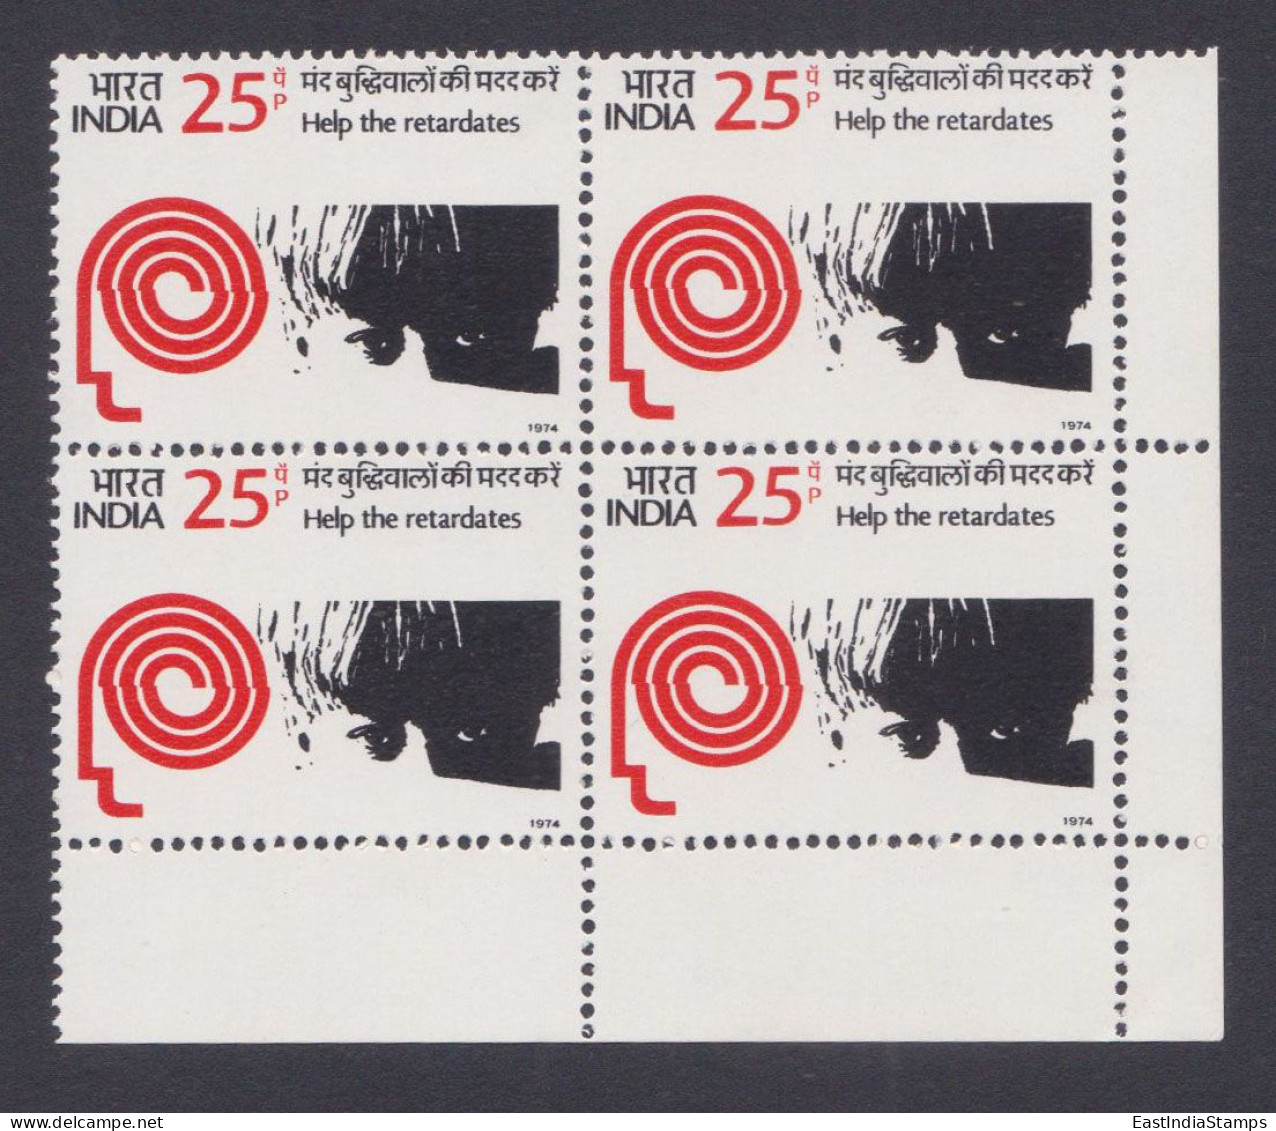 Inde India 1974 MNH Retardates, Retards, Mental Disability, Disabled, Mentally Challenged, Handicap, Block - Unused Stamps